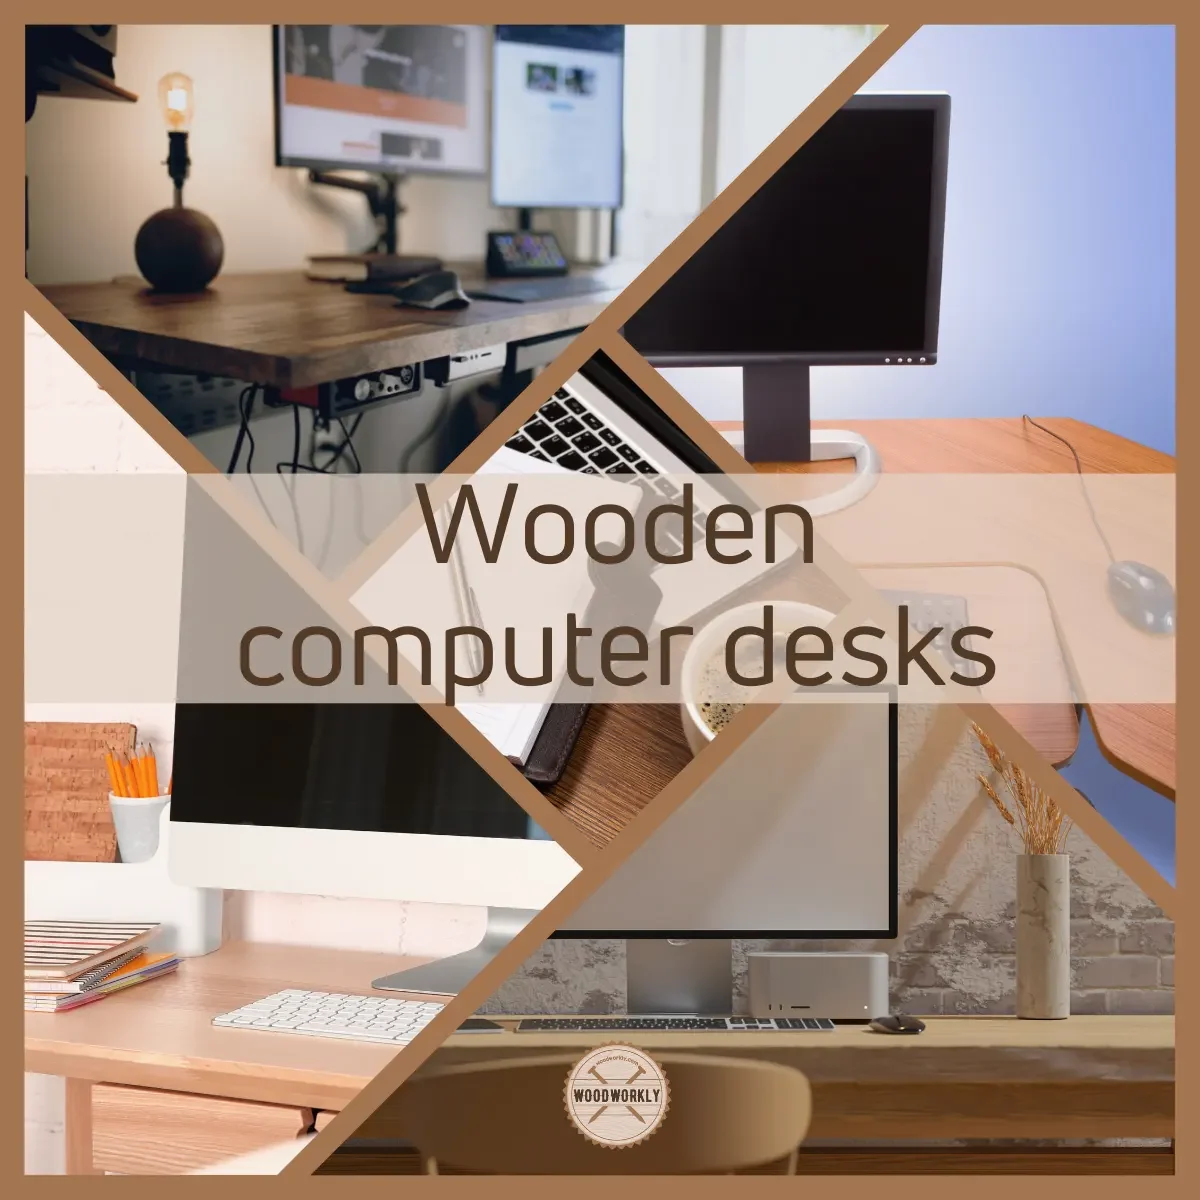 Wooden computer desks